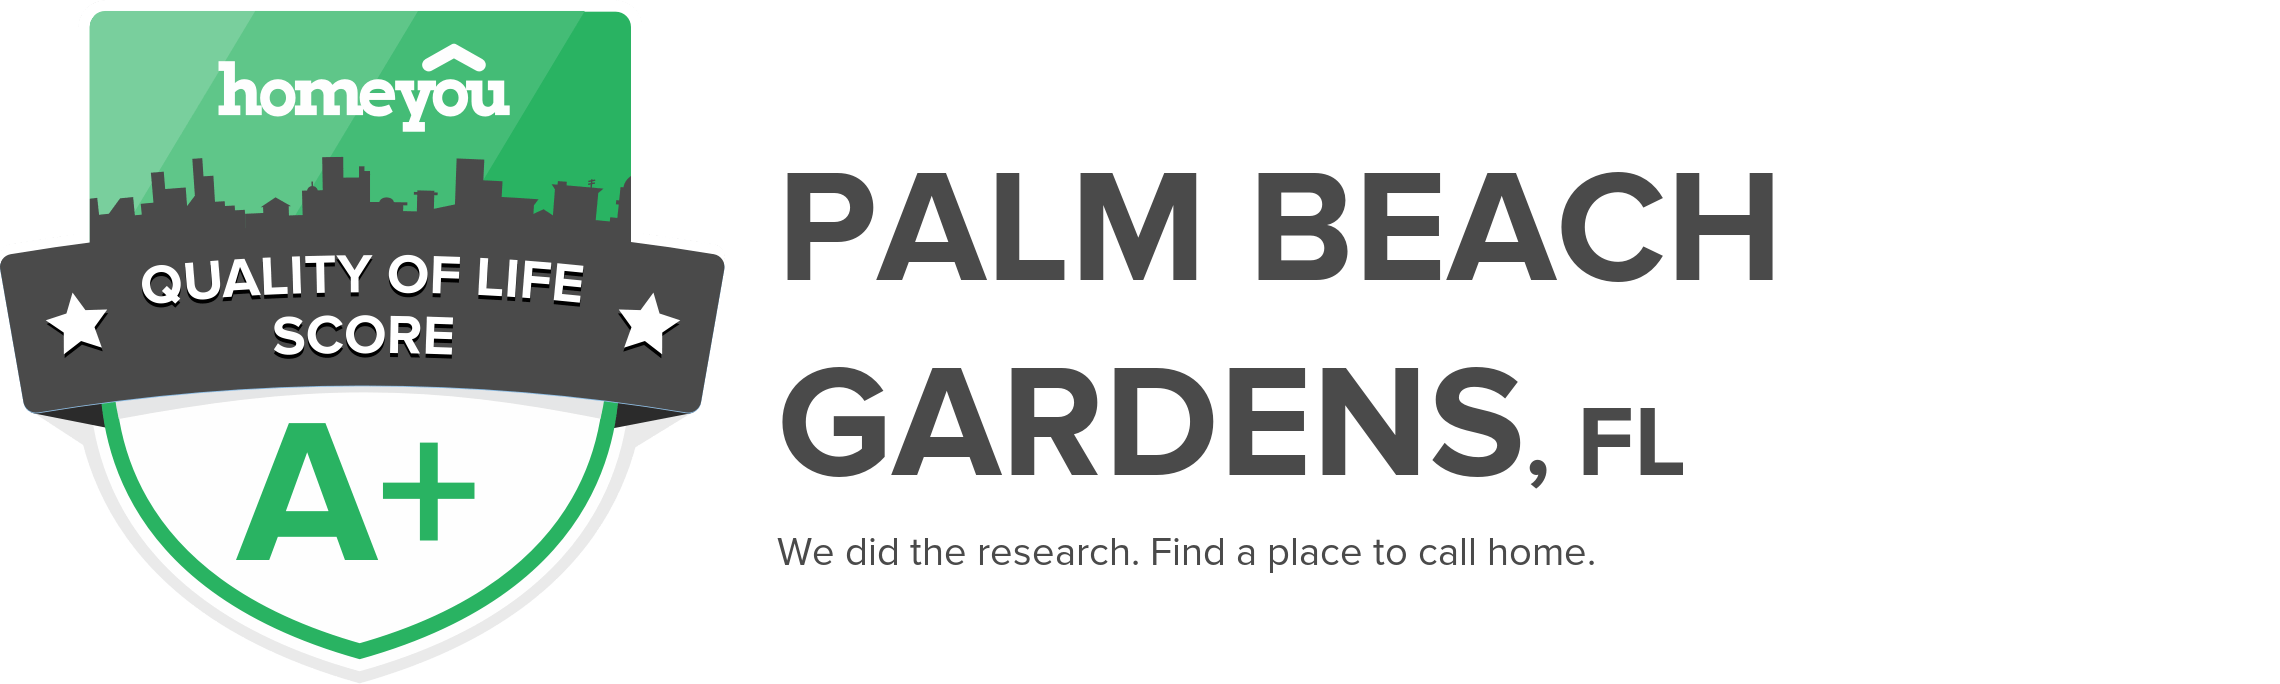 Palm Beach Gardens, FL